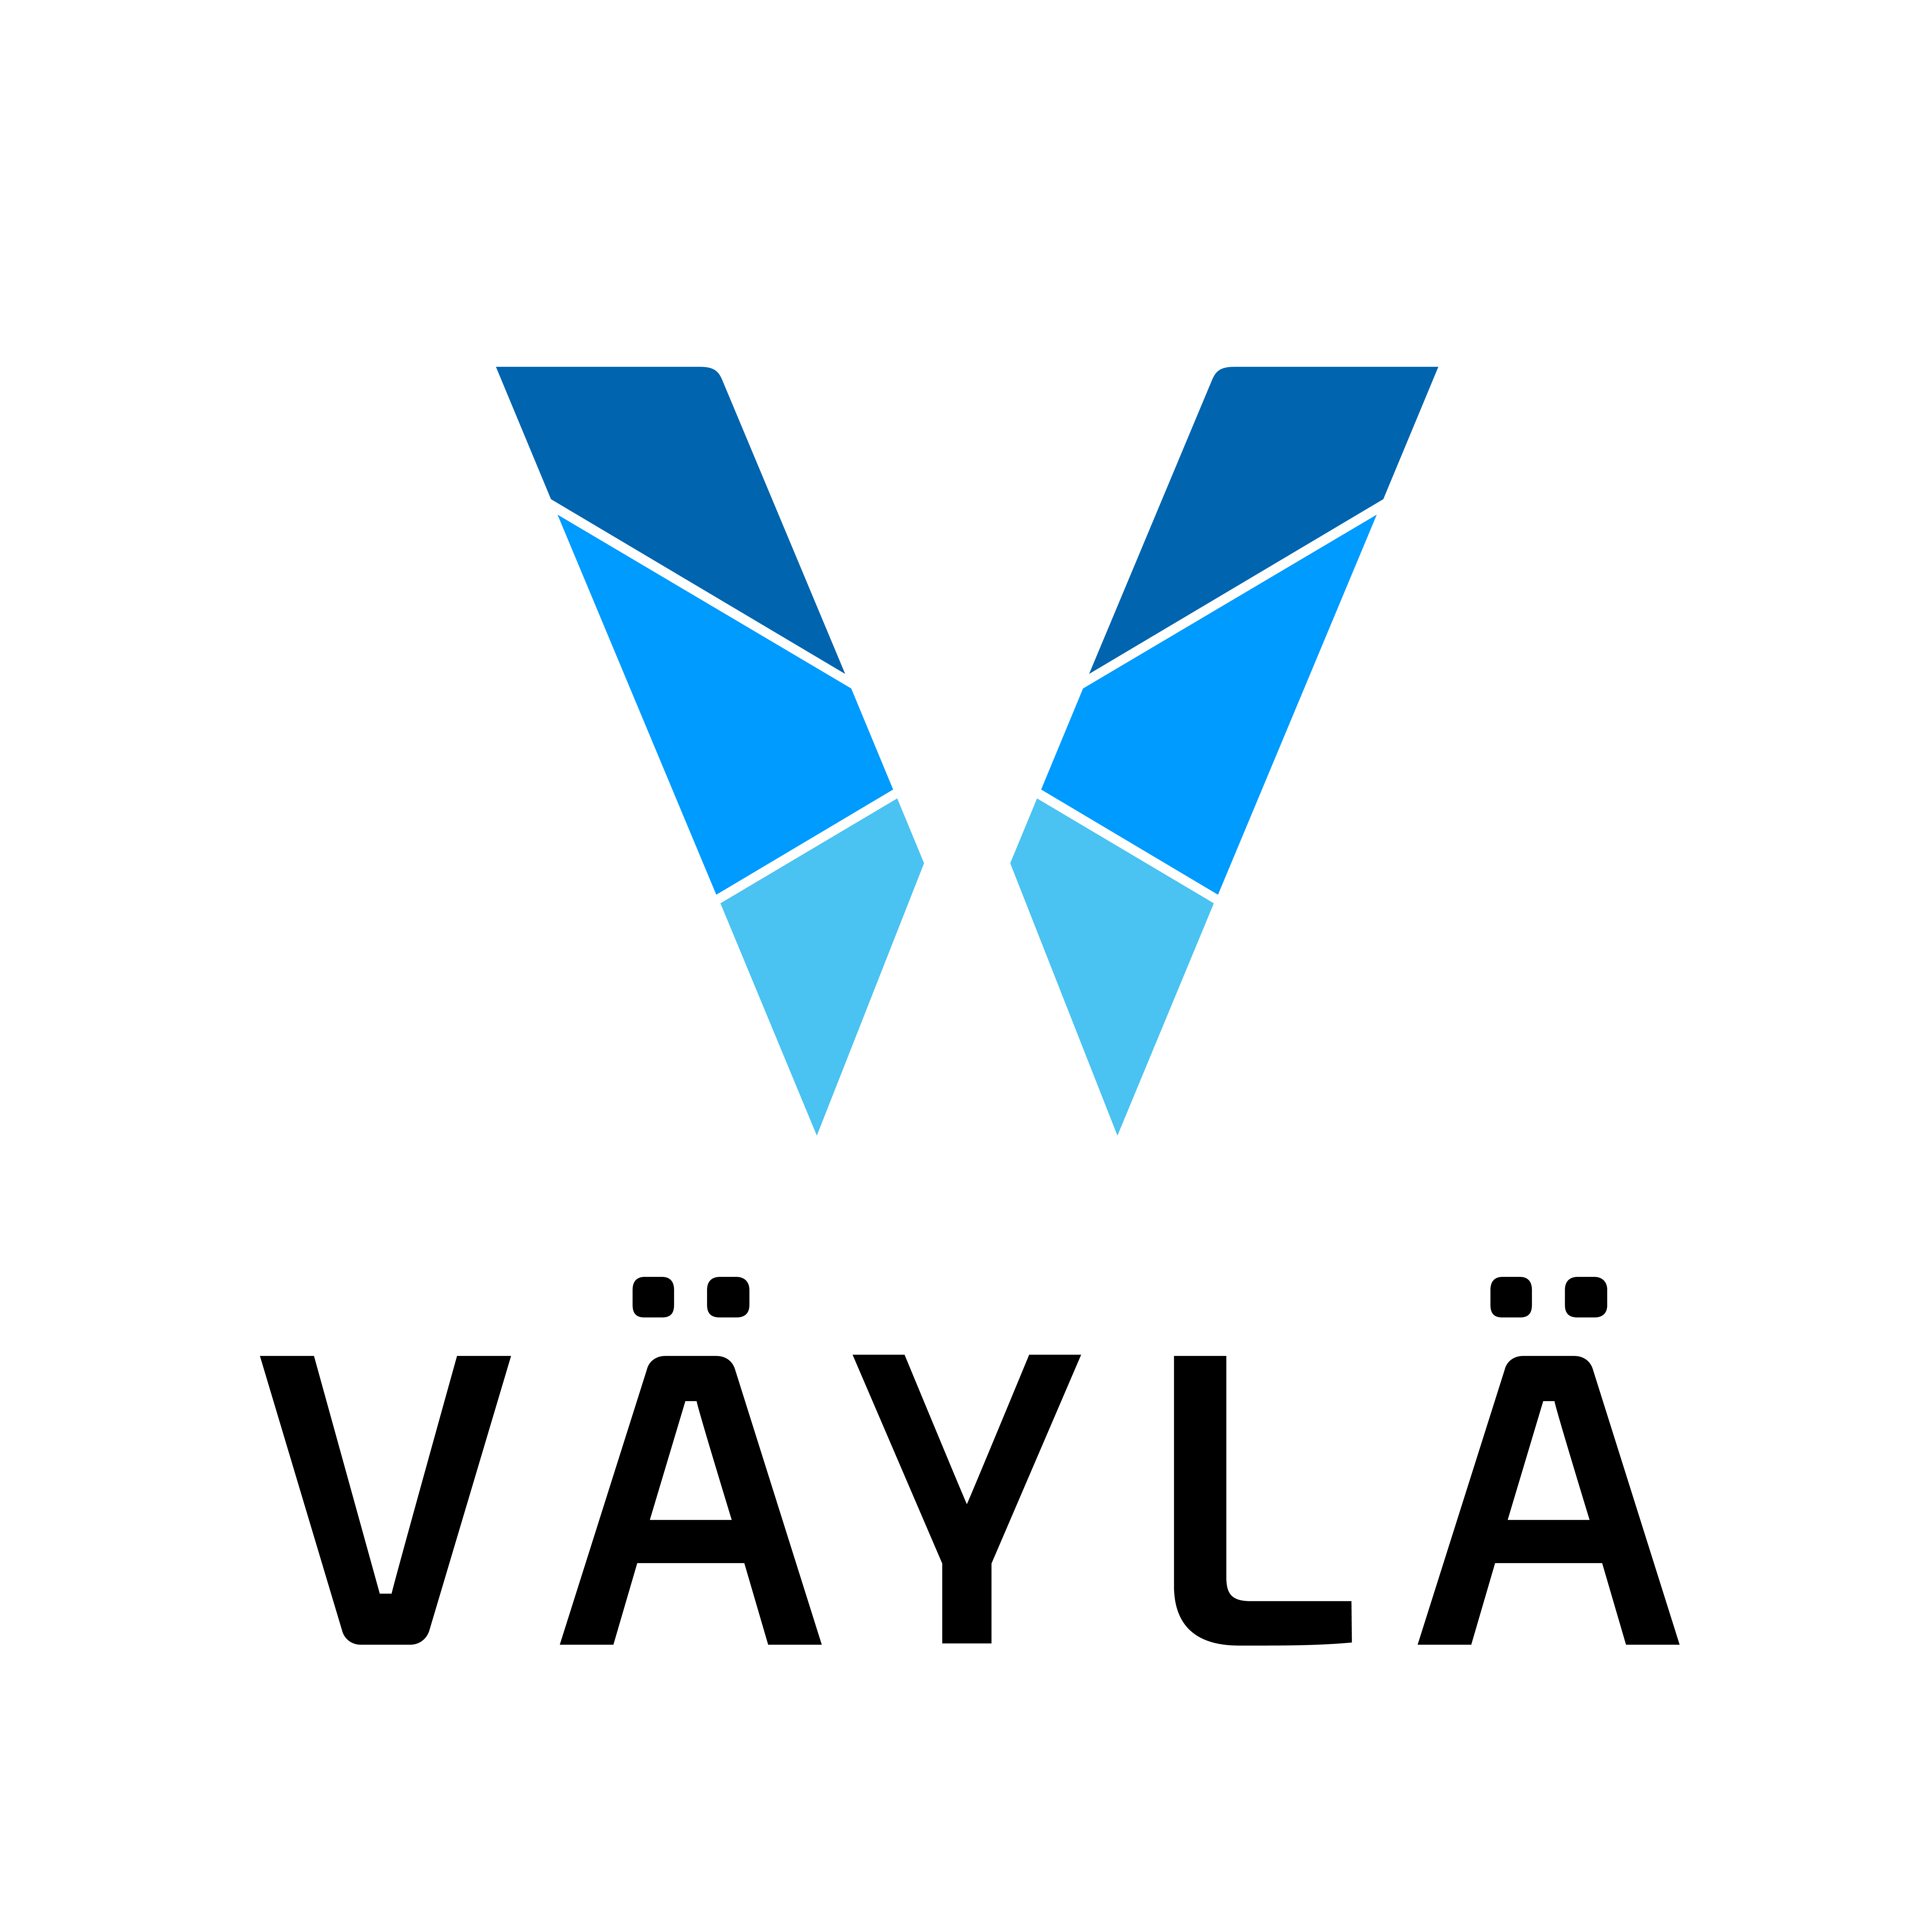 vaula_logo.jpg (584 bytes)